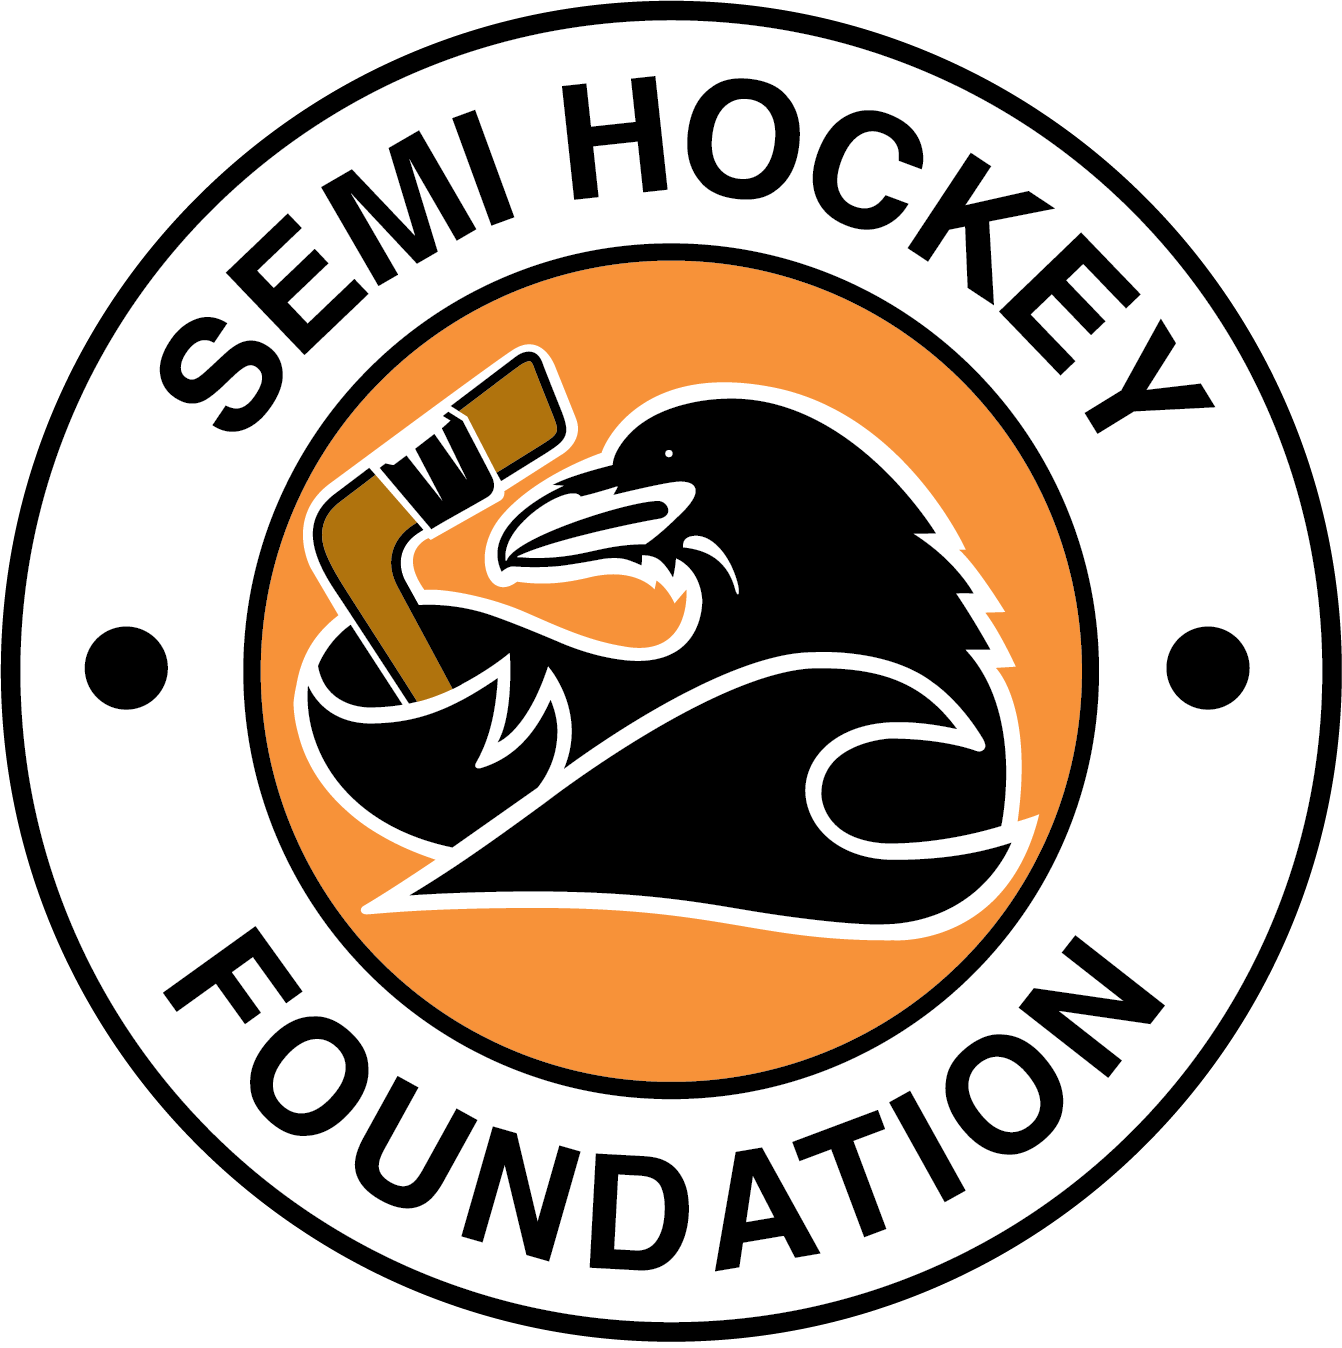 SemiHockeyFoundation_Live